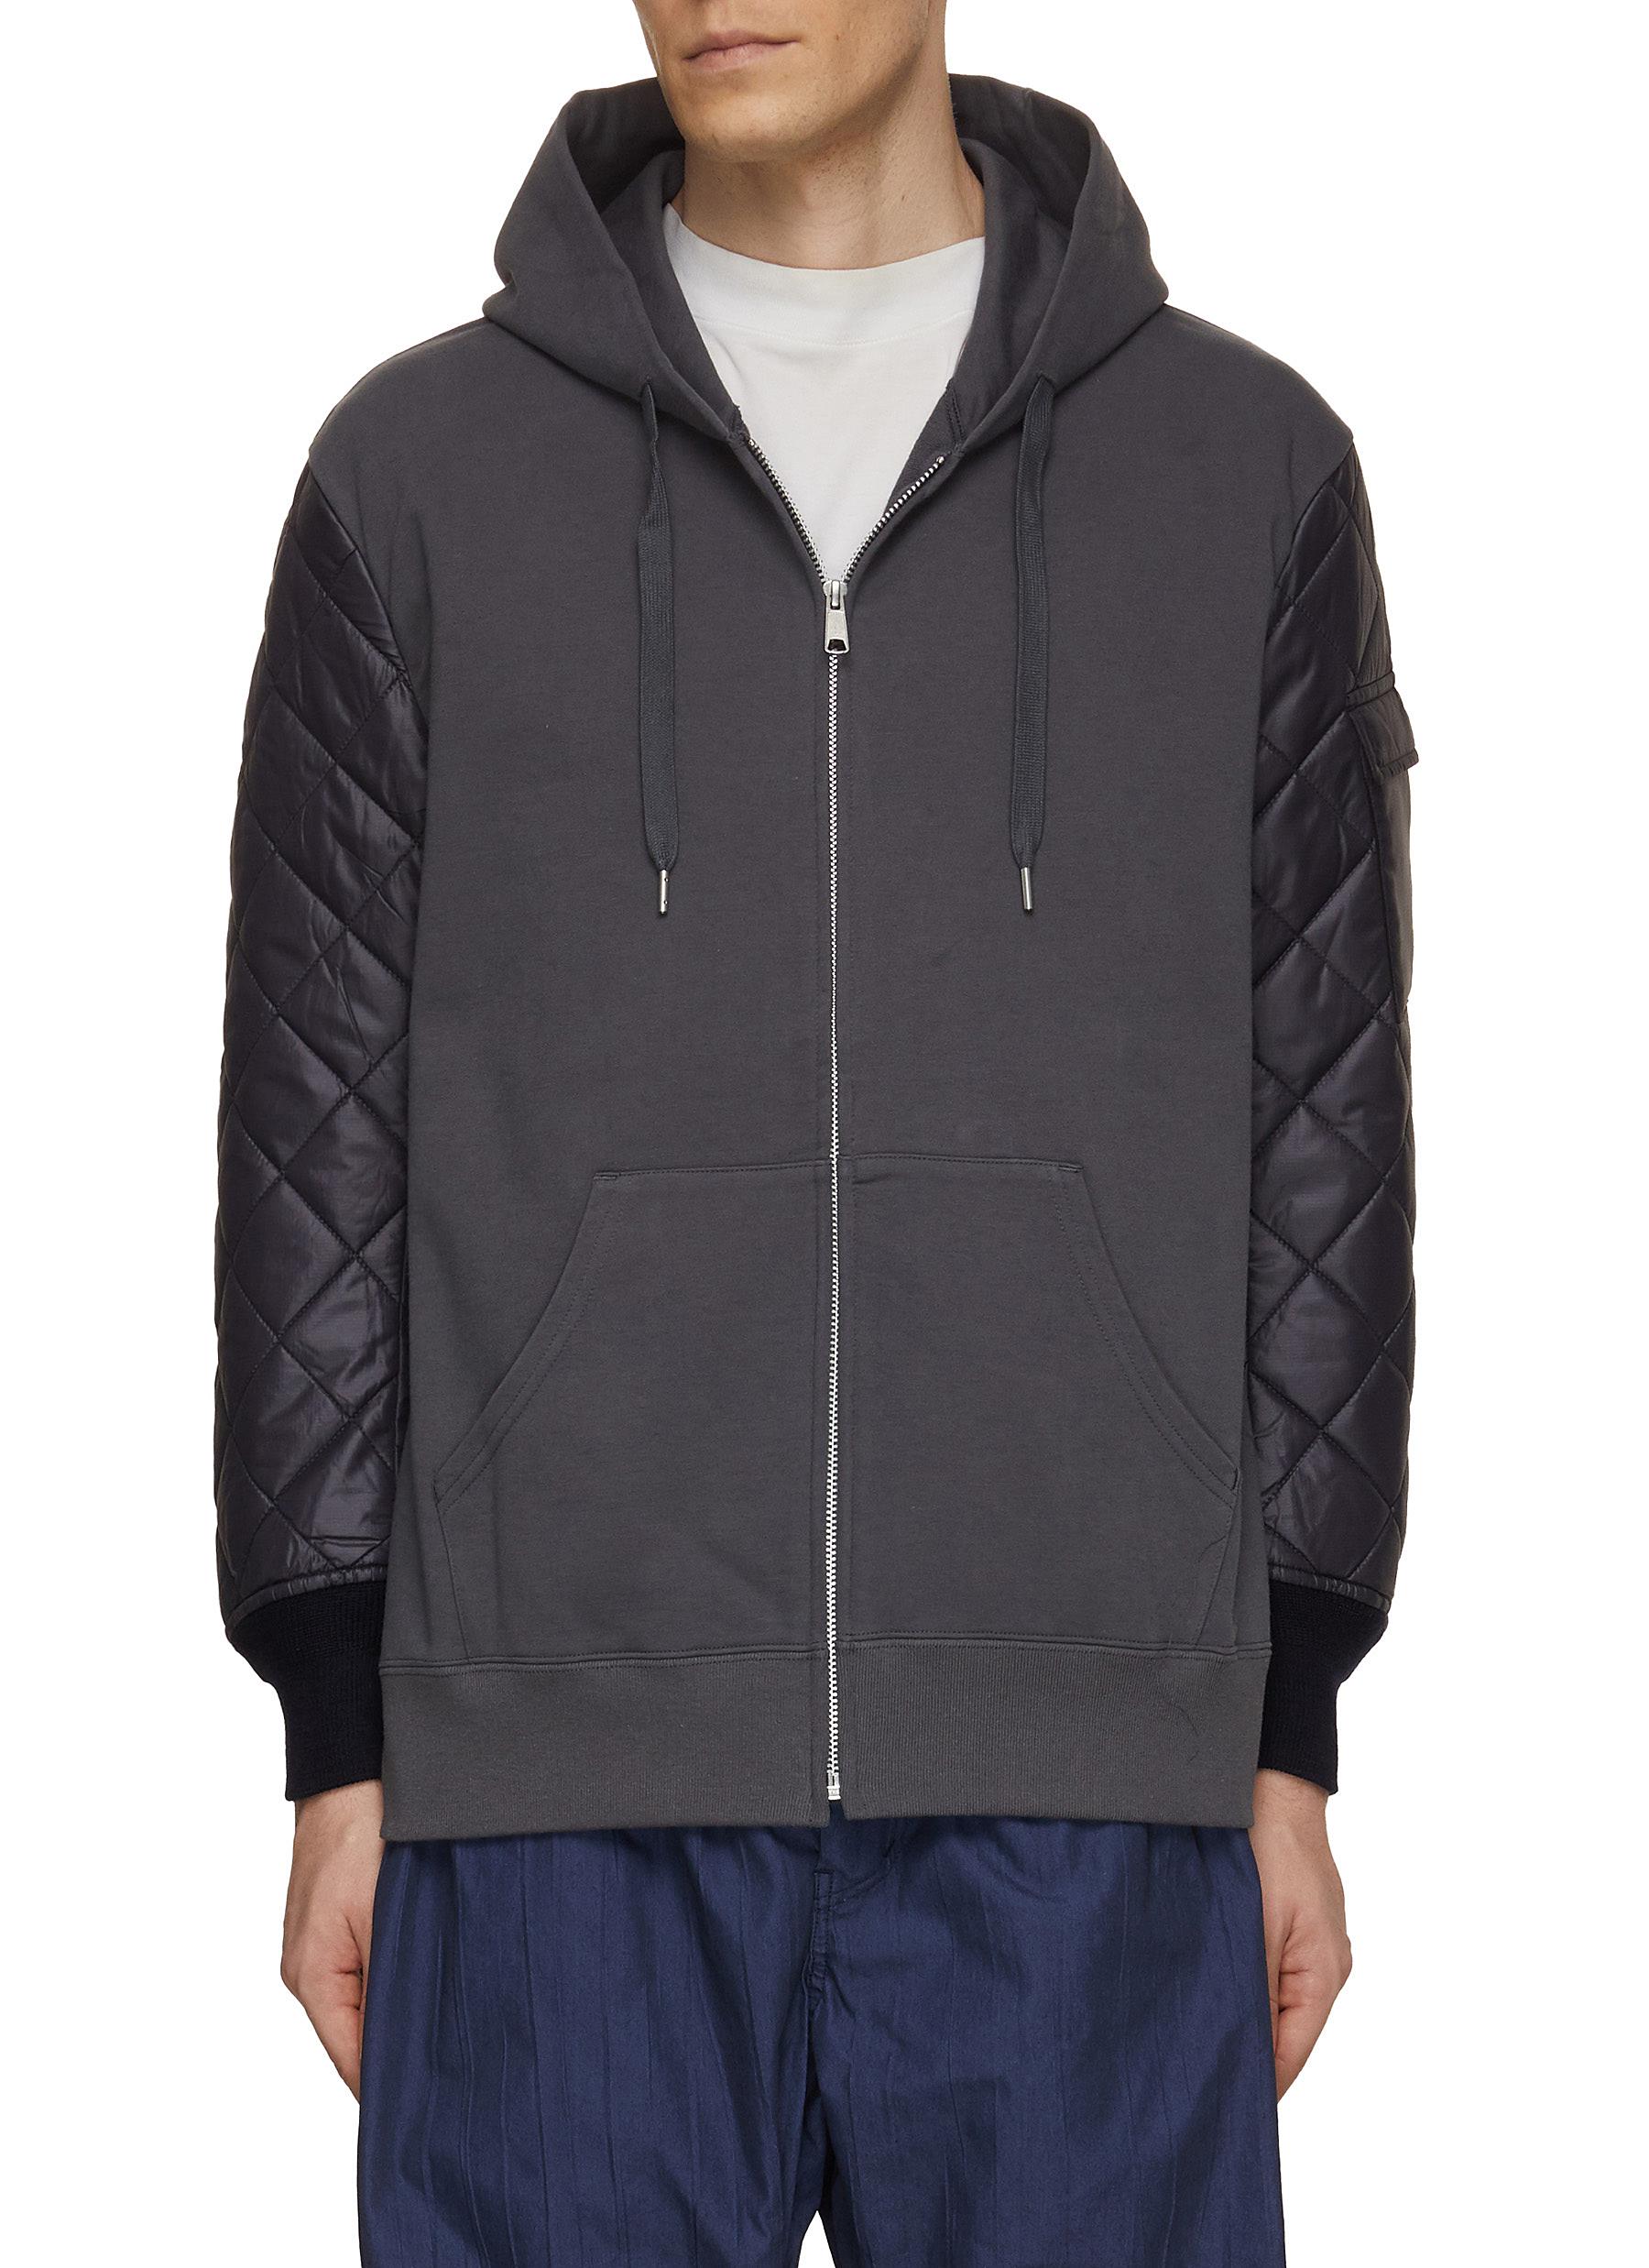 Louis Vuitton Regular Size L Hoodies & Sweatshirts for Men for